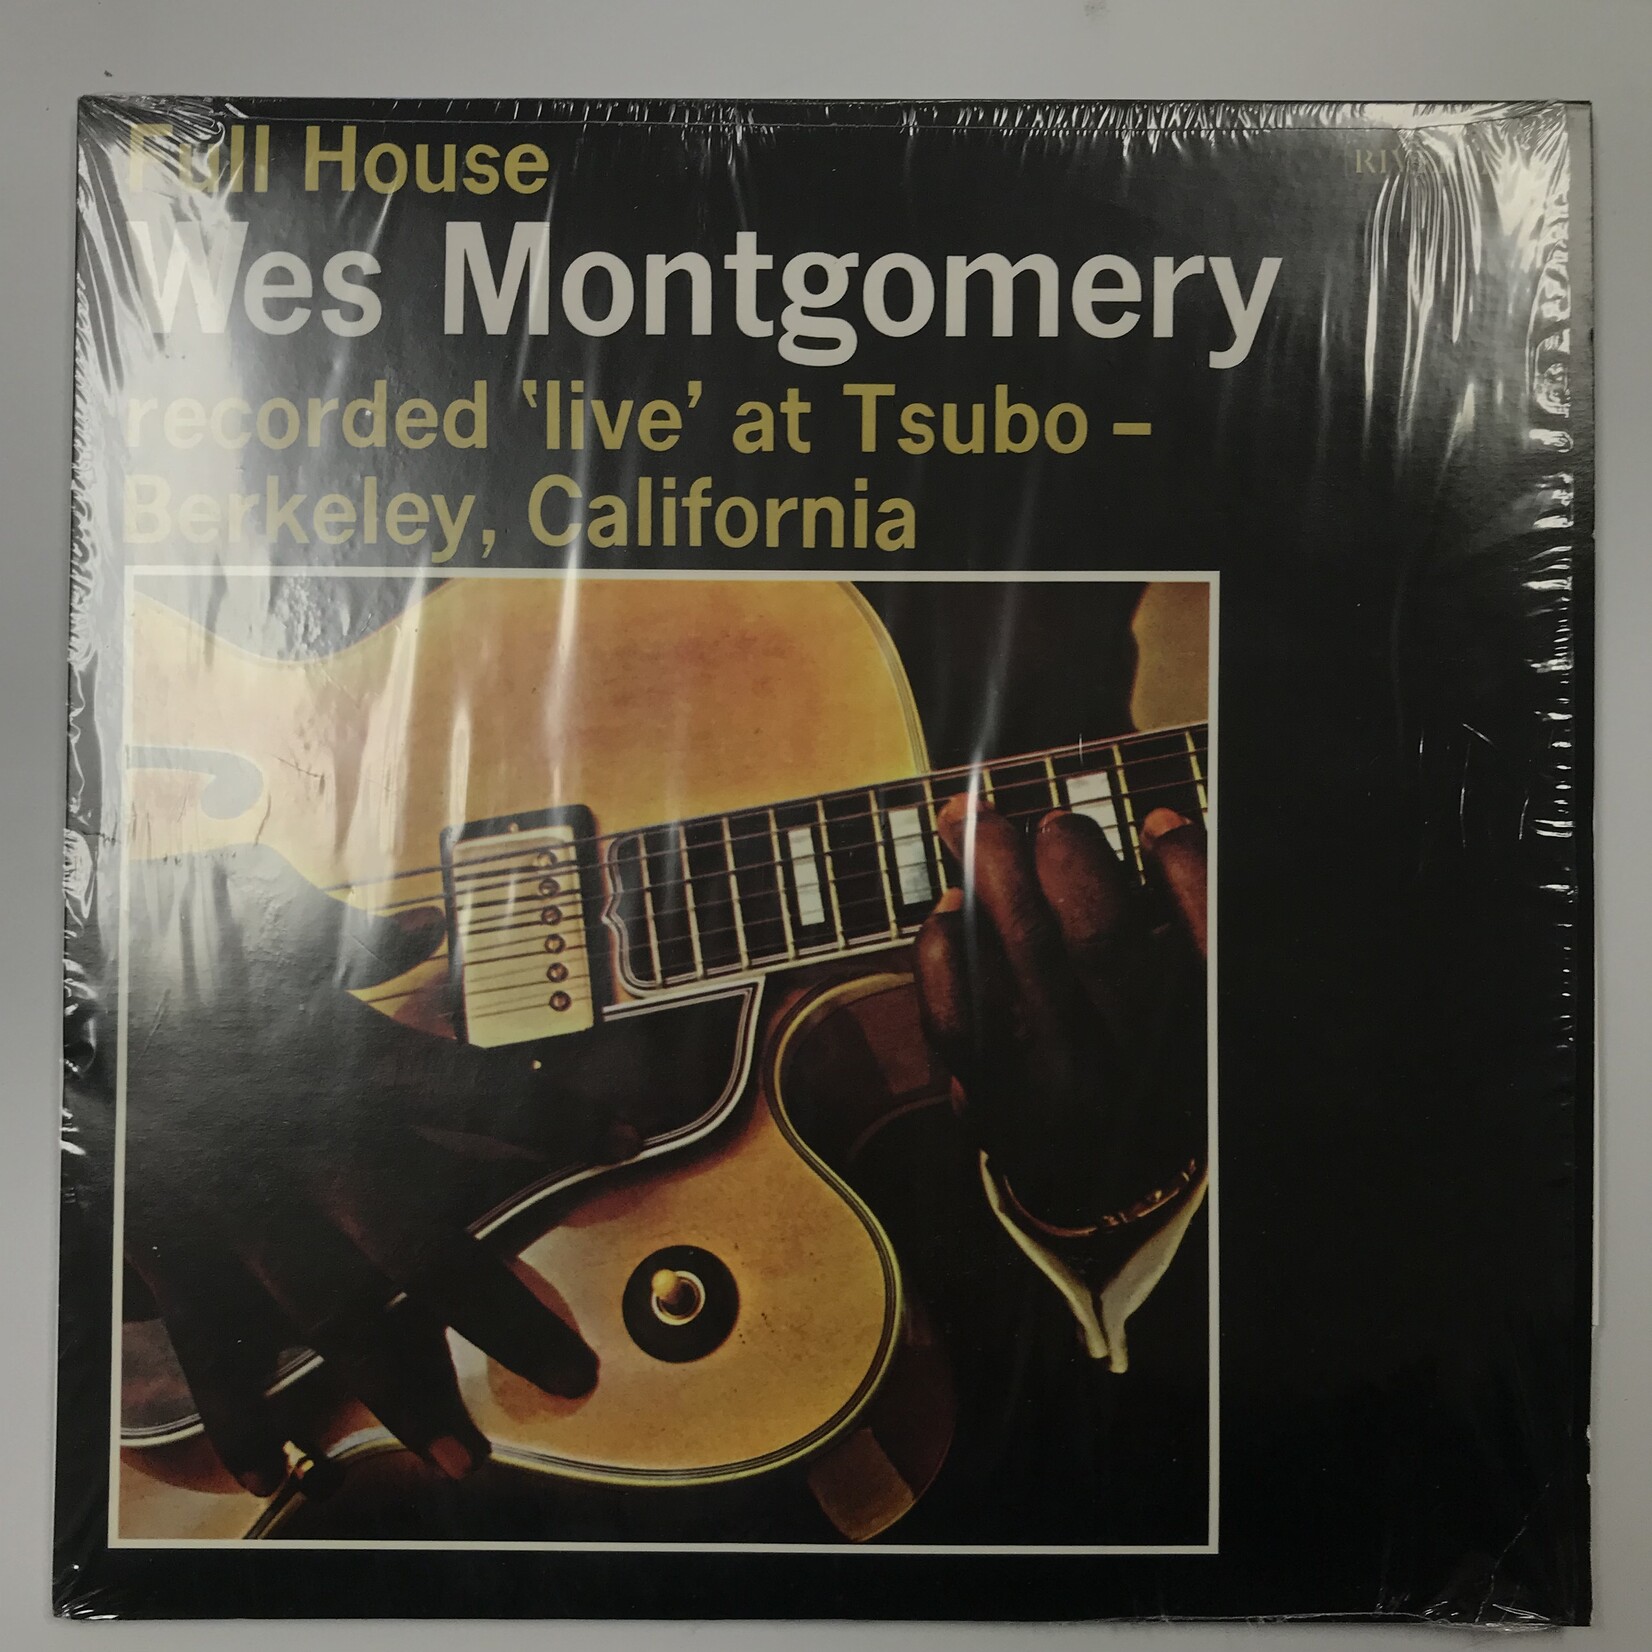 Wes Montgomery - Full House - Vinyl LP (USED)